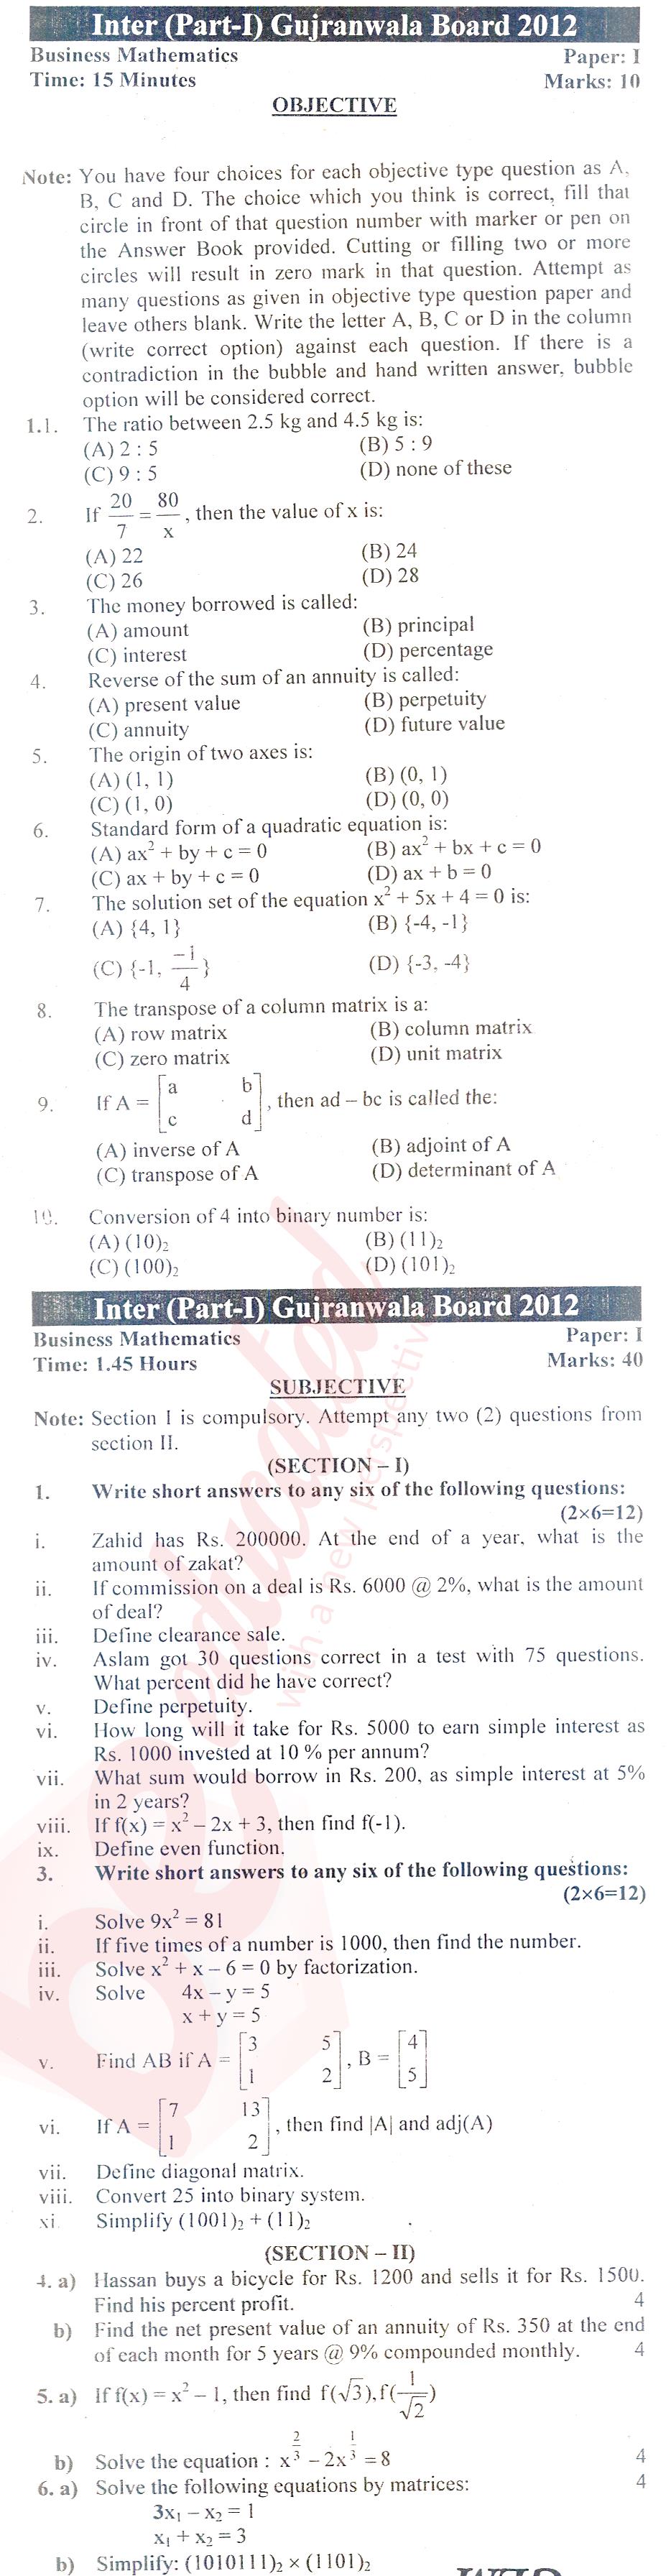 Business Mathematics ICOM Part 1 Past Paper Group 1 BISE Gujranwala 2012